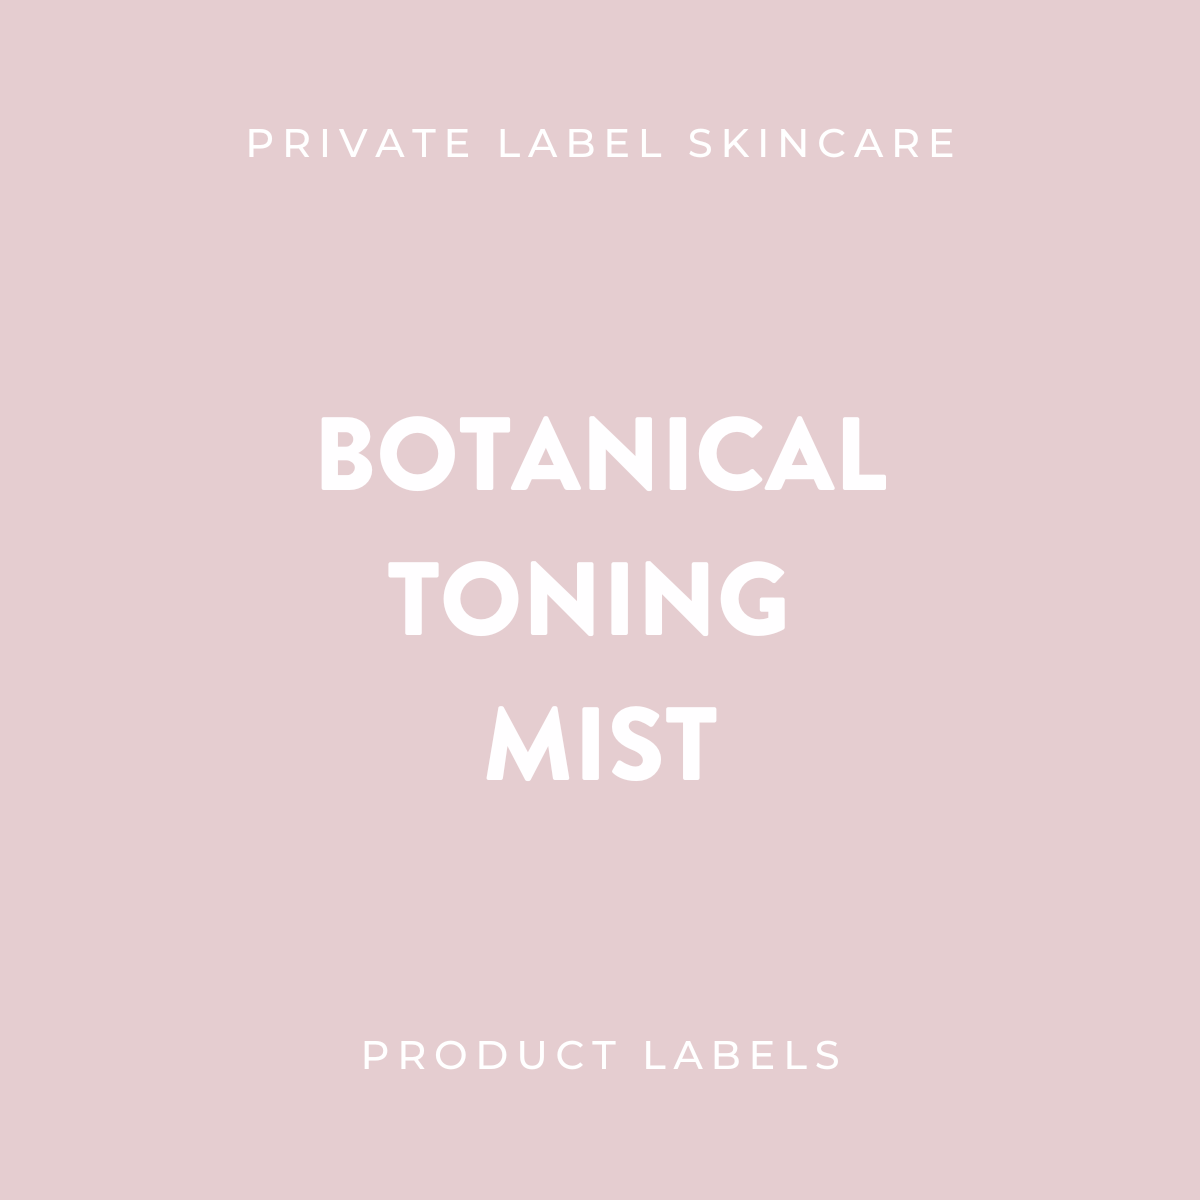 Botanical Toning Mist Product Labels (x 20 labels)